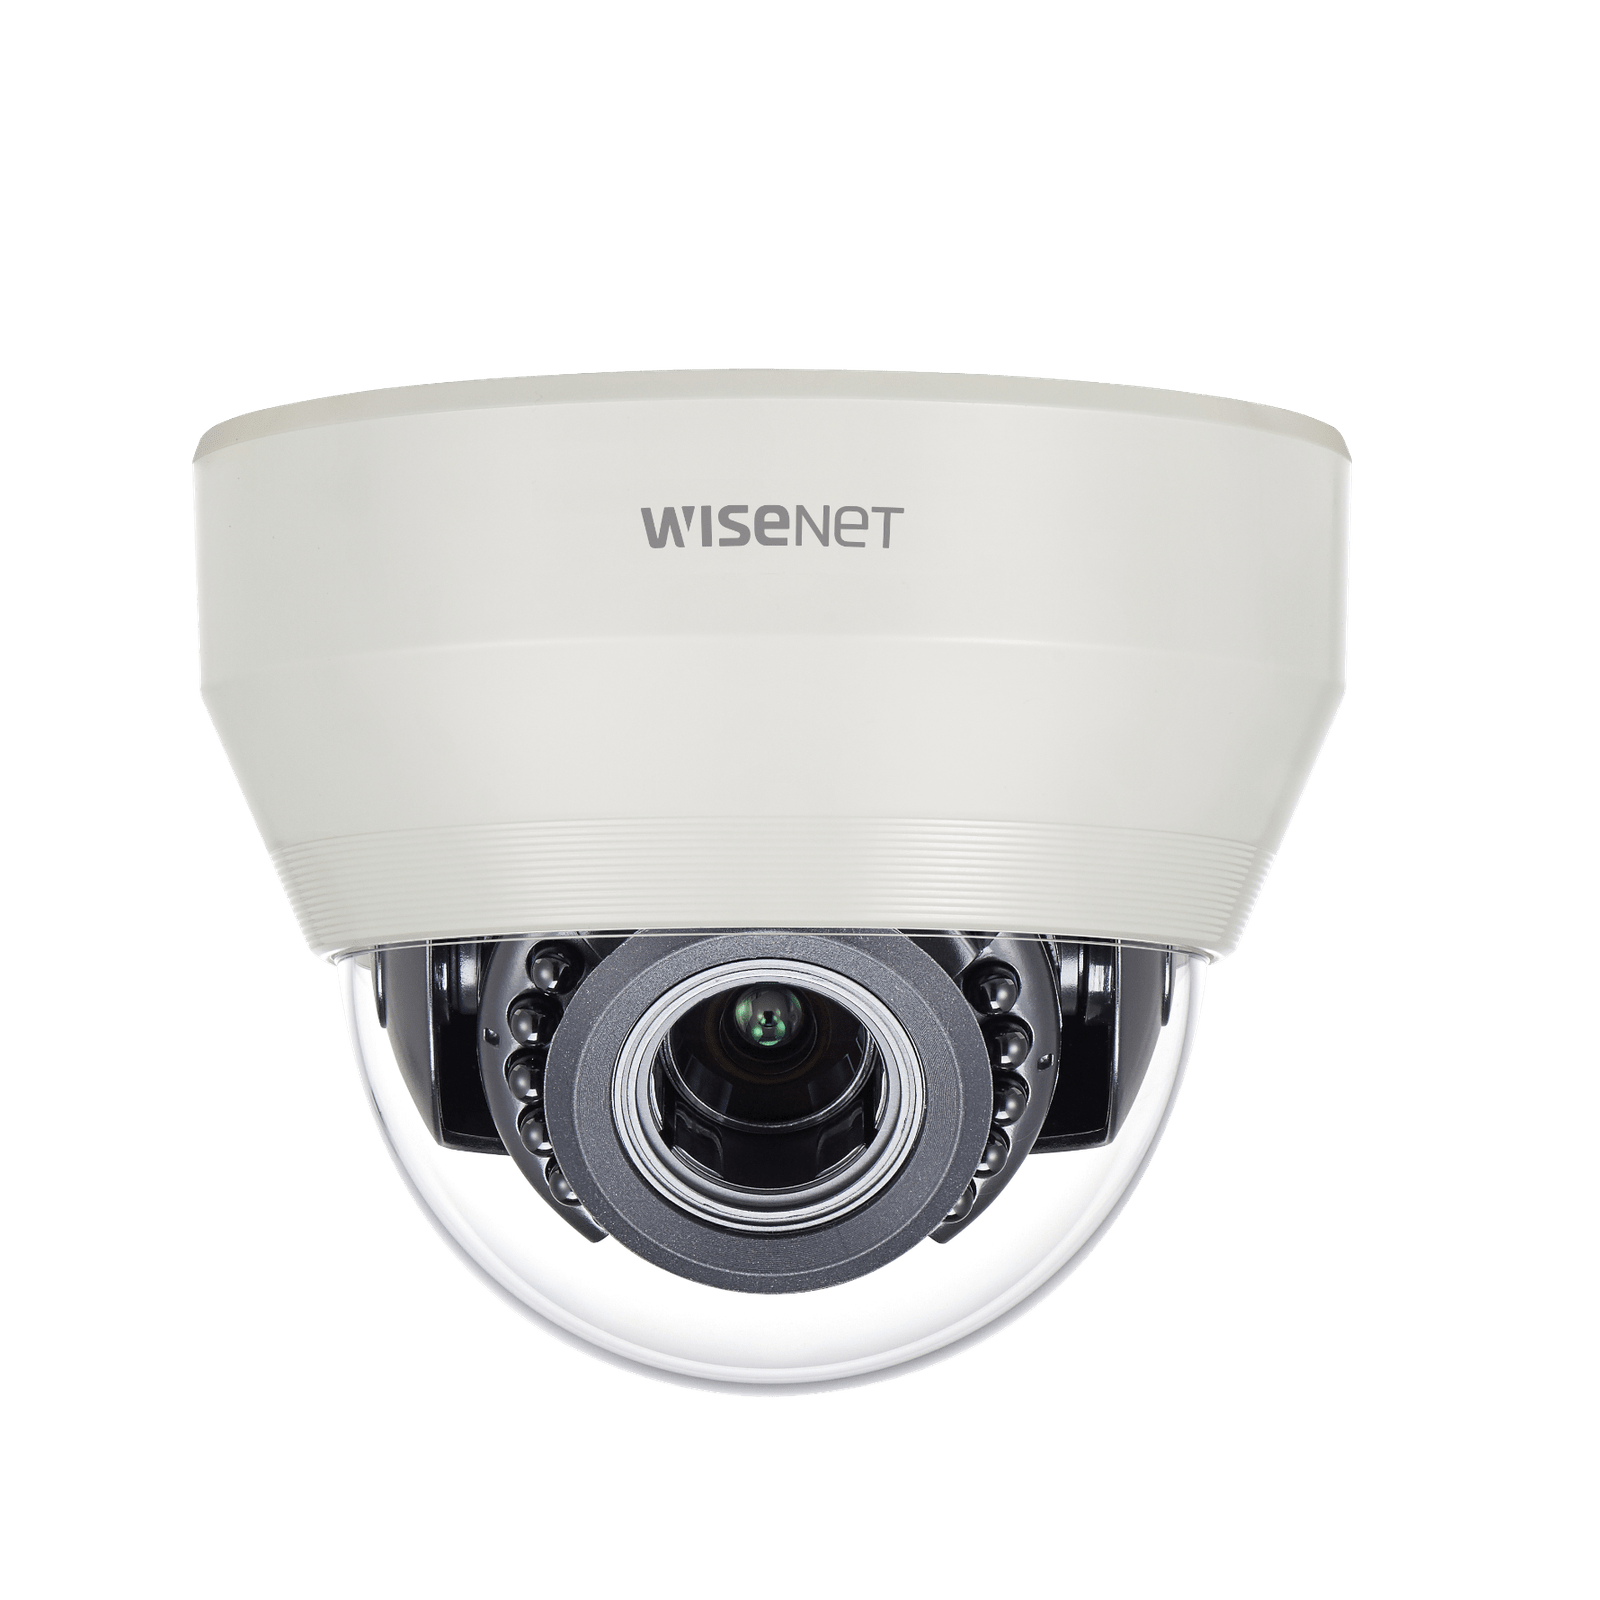 HCD-7070RA Dome Security Camera